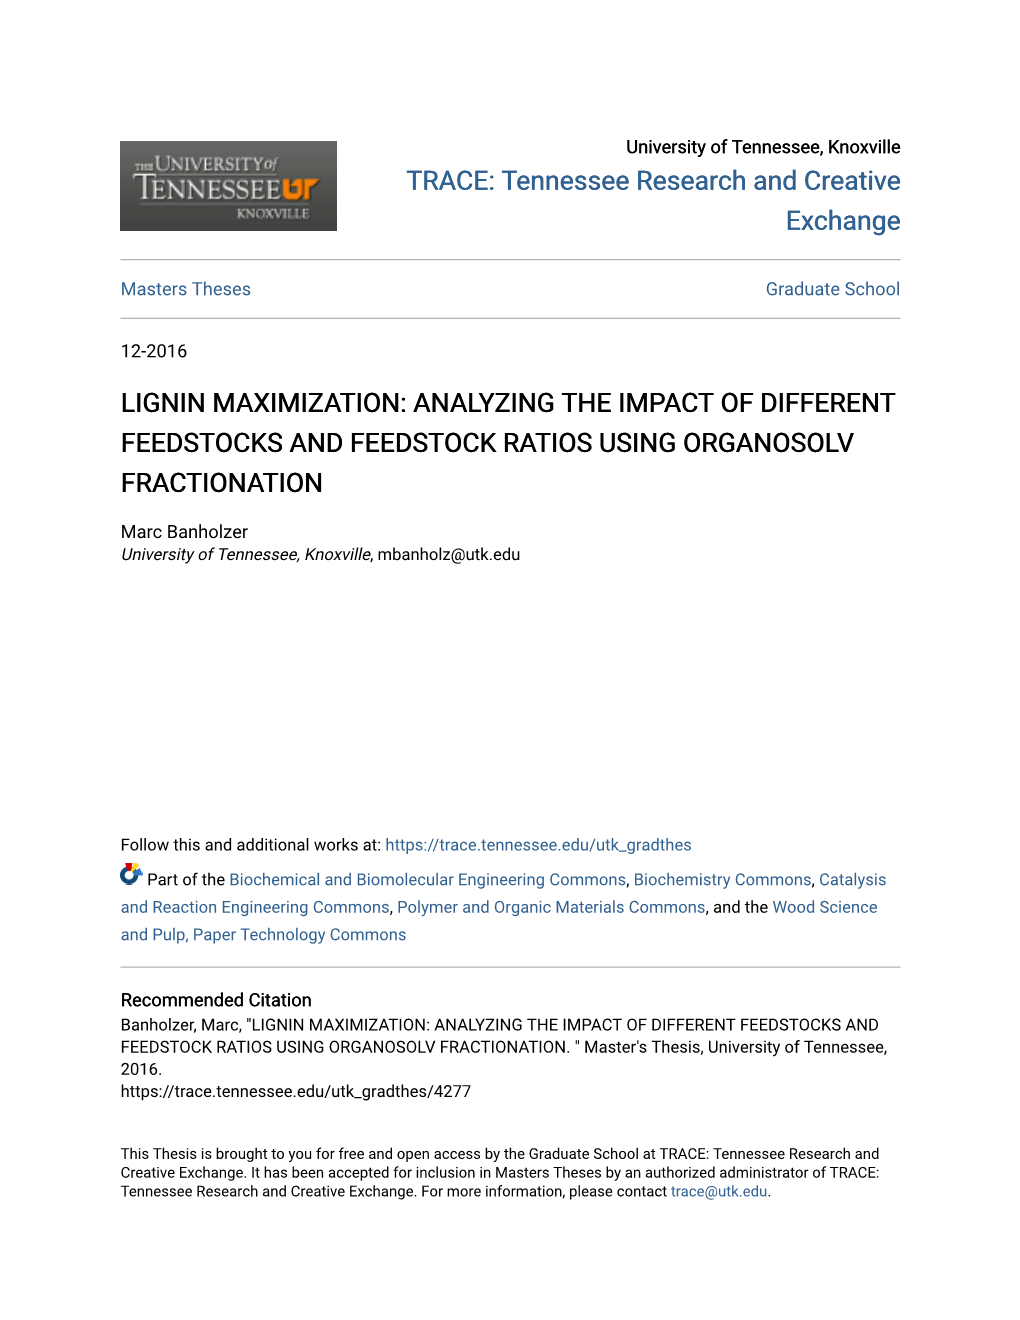 Lignin Maximization: Analyzing the Impact of Different Feedstocks and Feedstock Ratios Using Organosolv Fractionation